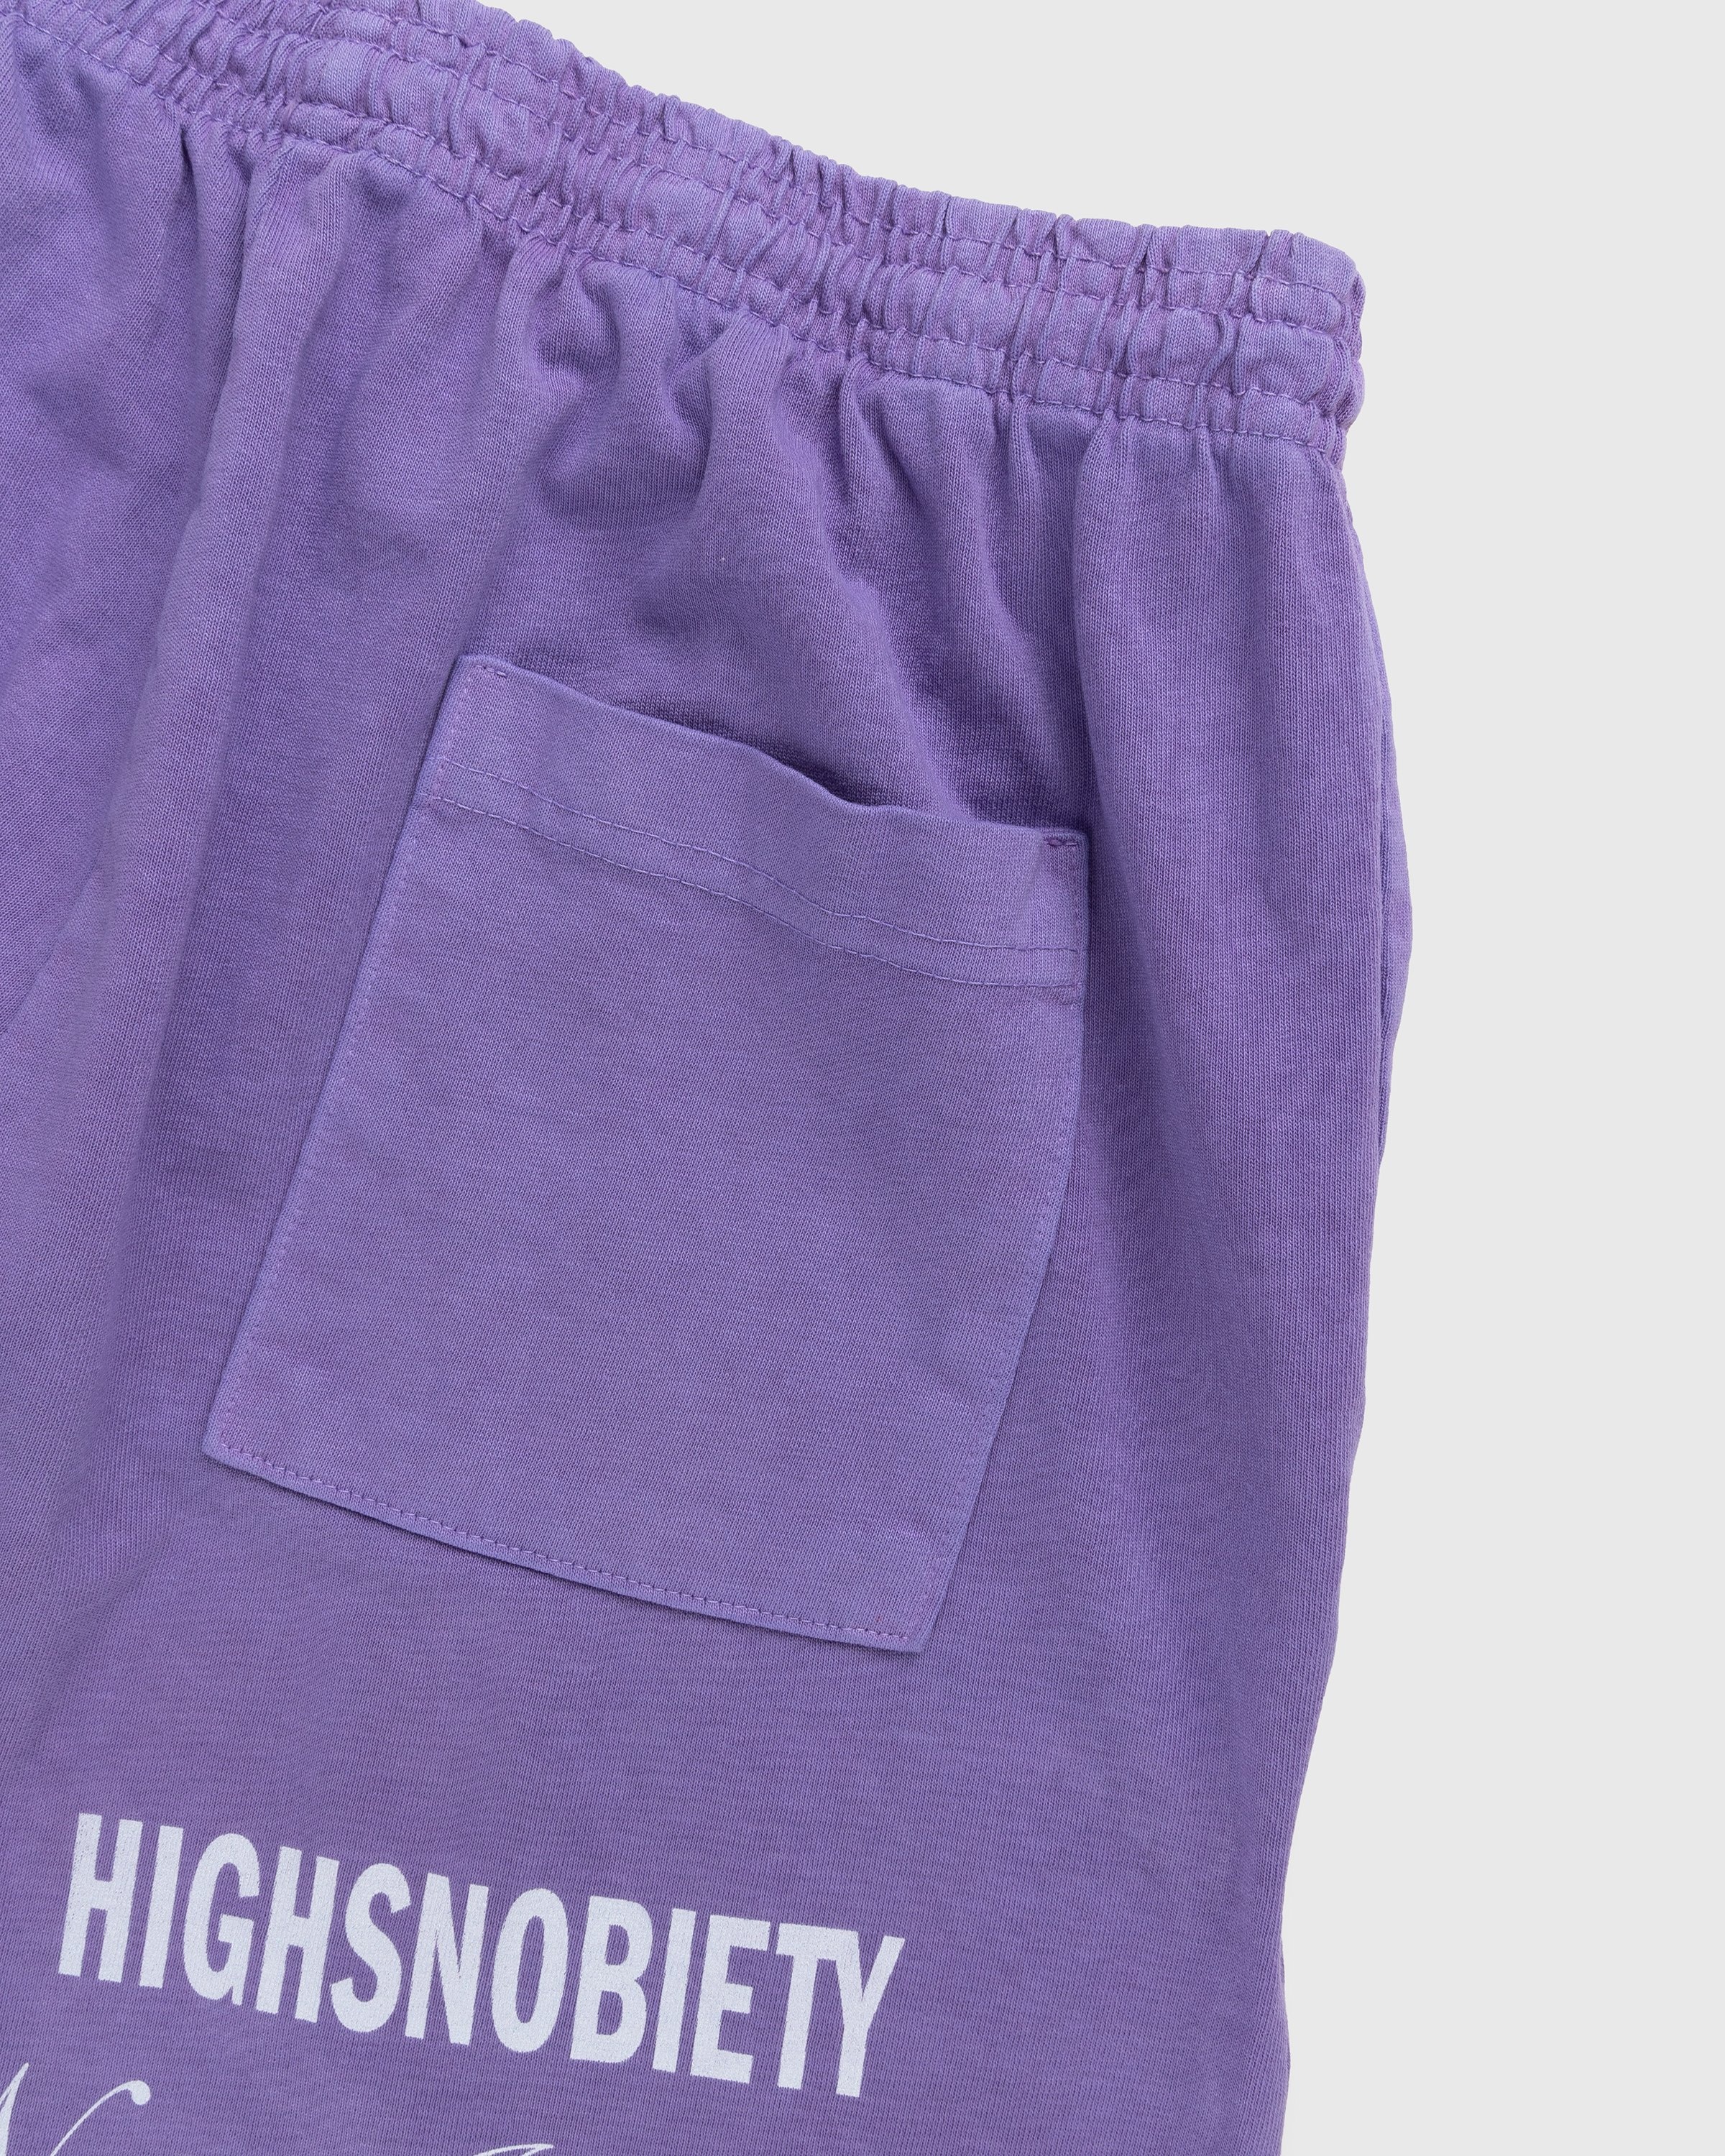 Bstroy x Highsnobiety – Not In Paris 4 Flower Sweatshorts Lavender - Shorts - Purple - Image 3